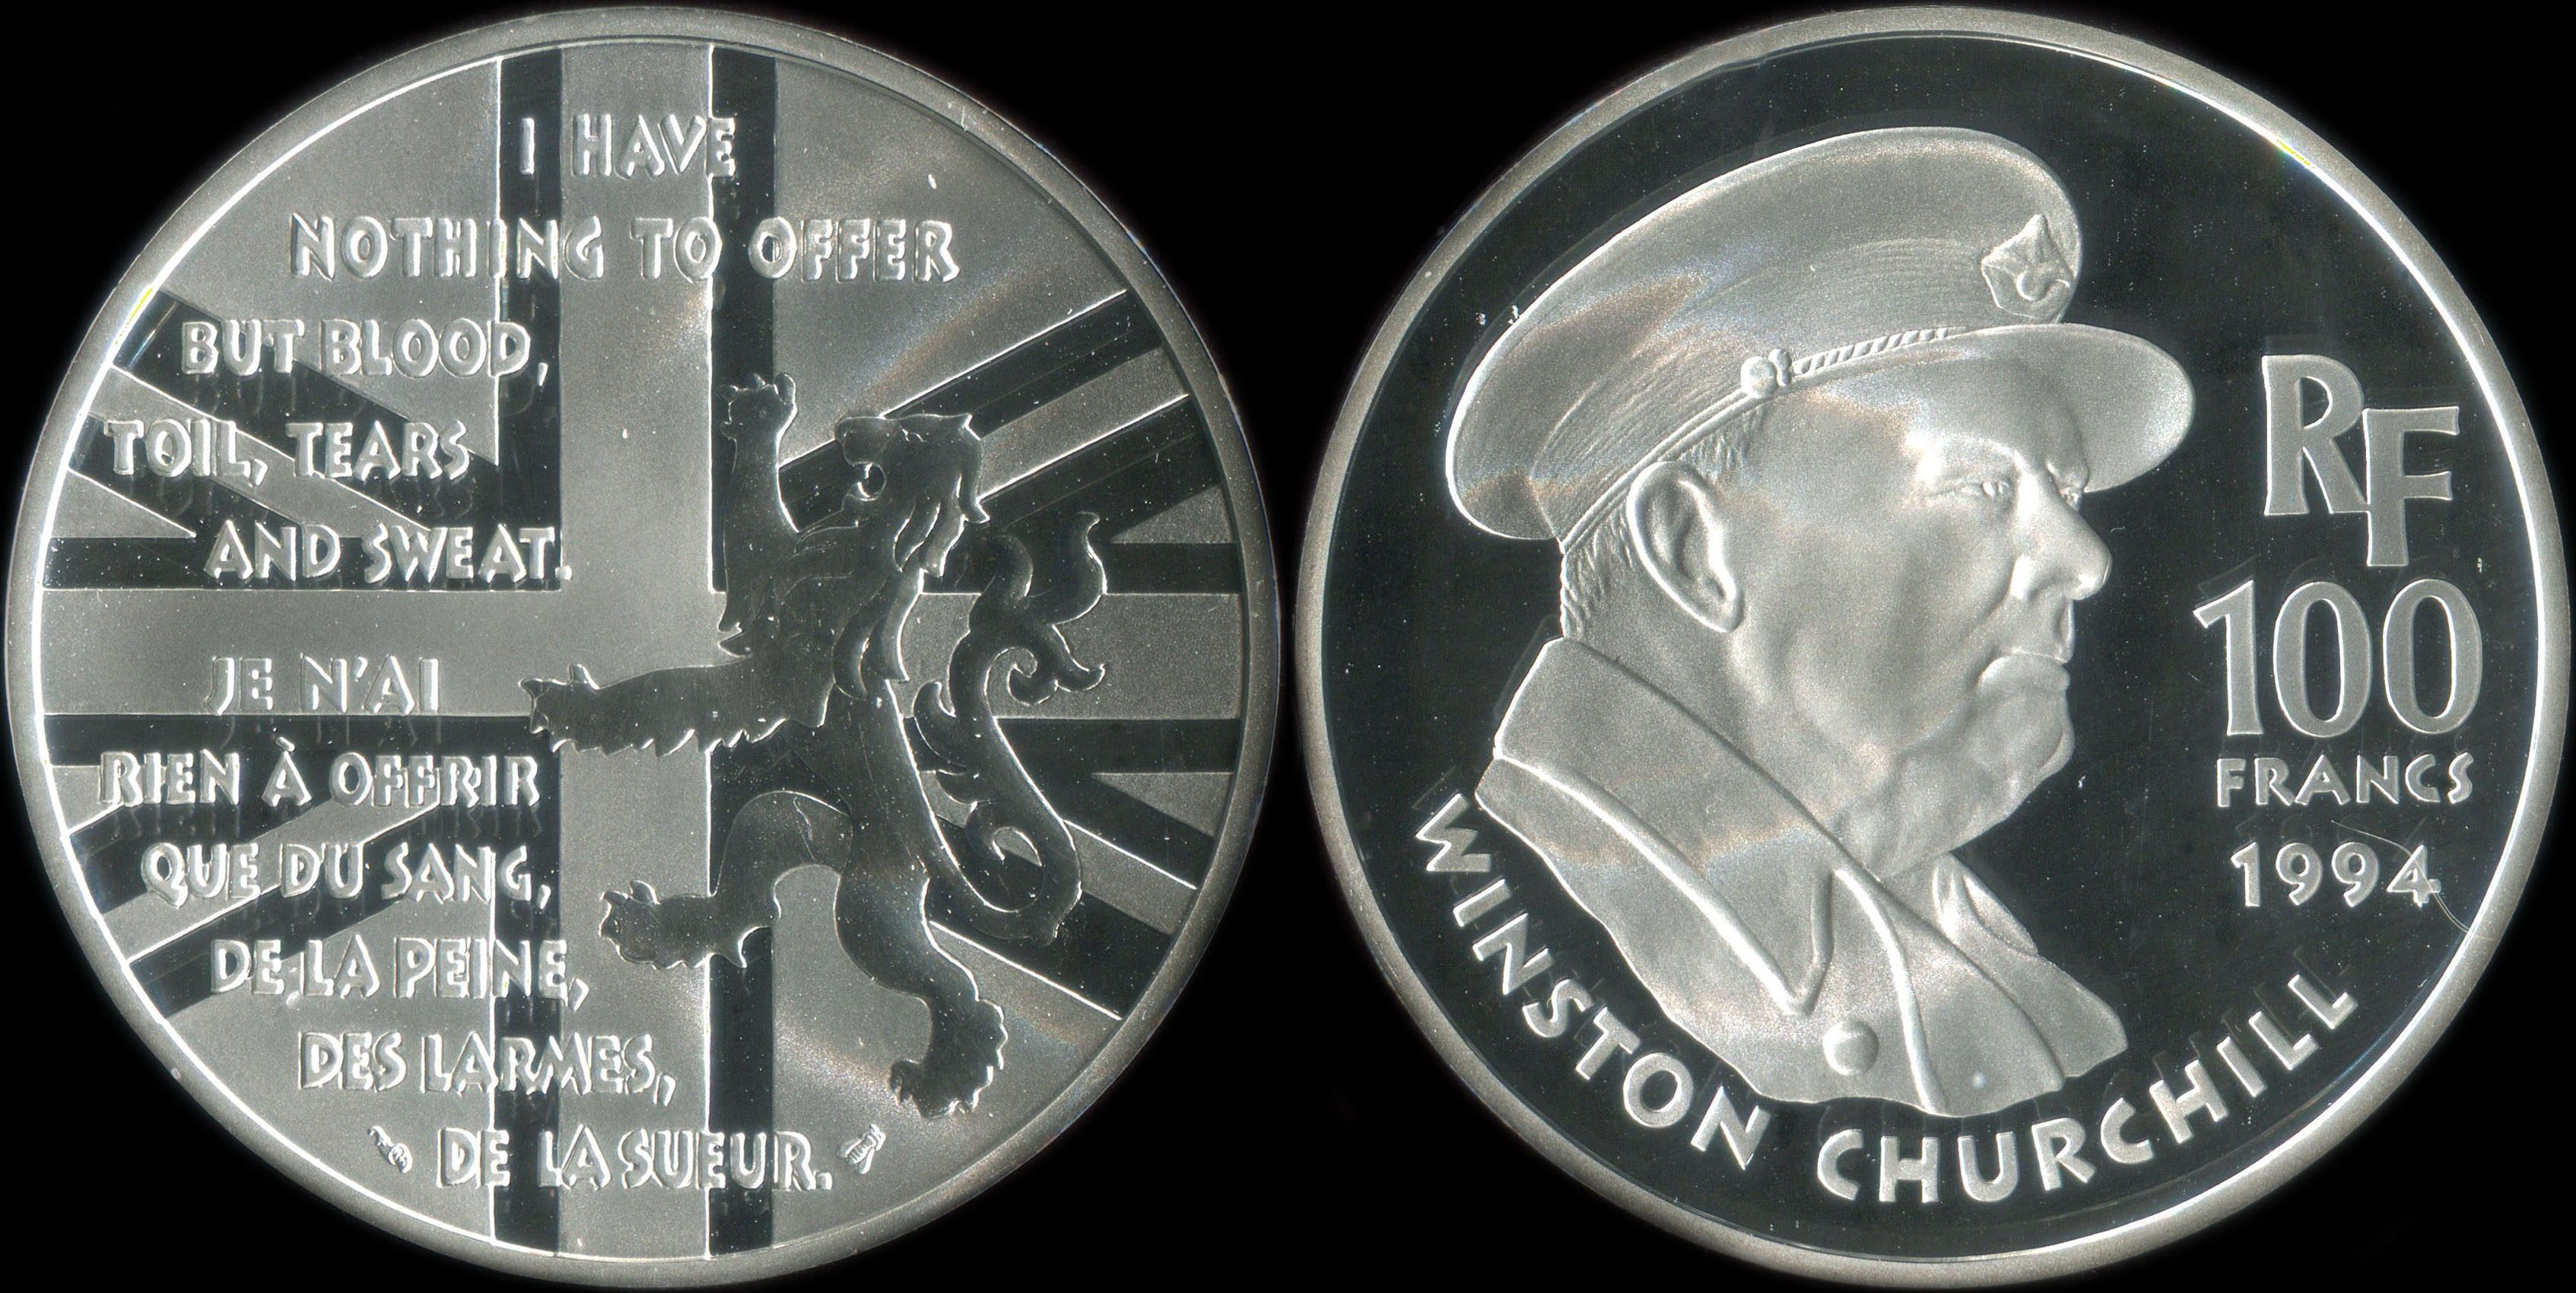 Pice de 100 francs 1994 - La Libert retrouve - Winston Churchill